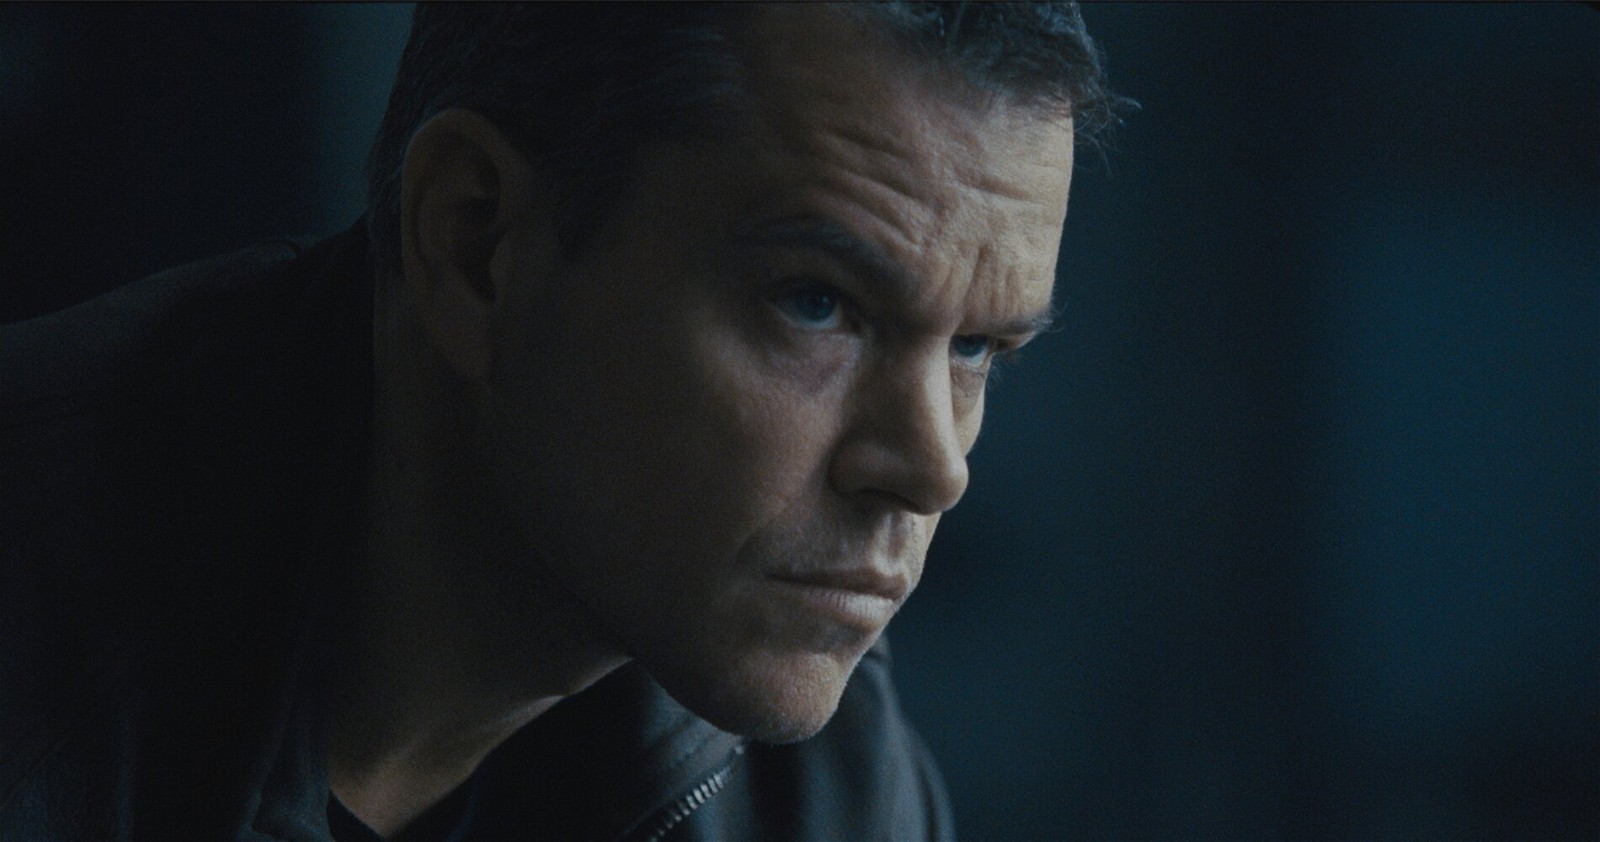 Matt Damon in and as Jason Bourne (2016)